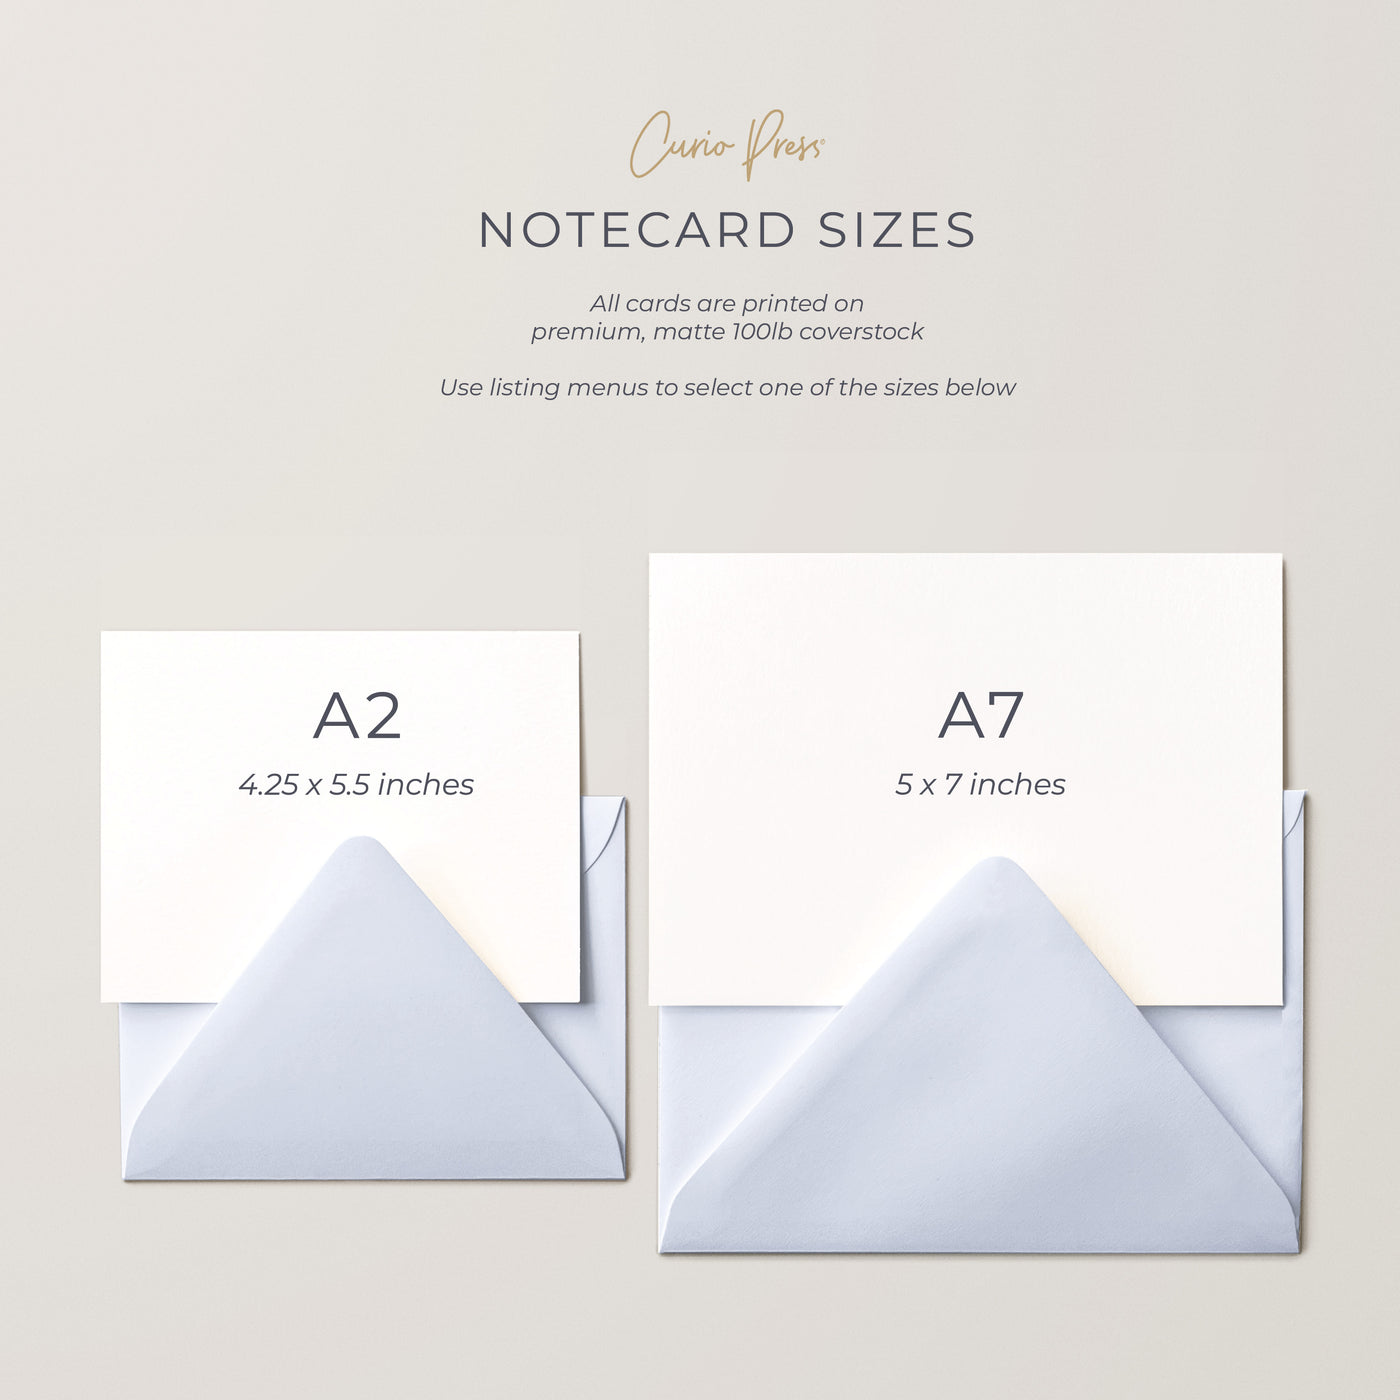 Posie: Folded Card Set